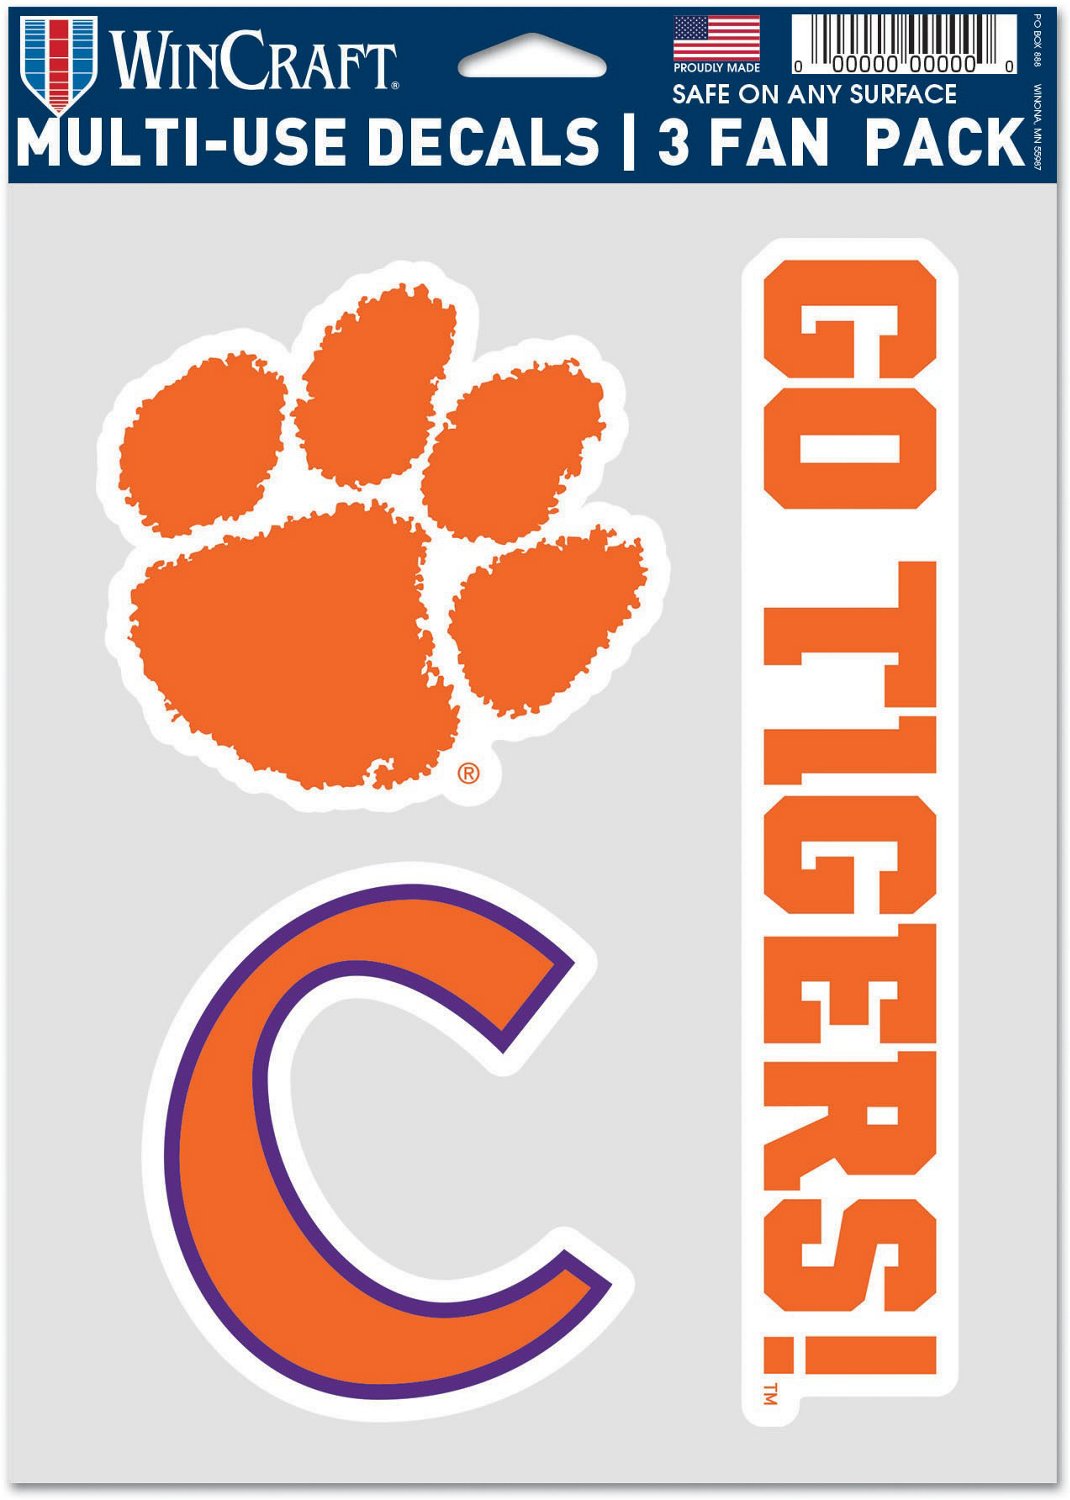 clemson tigers logo vector